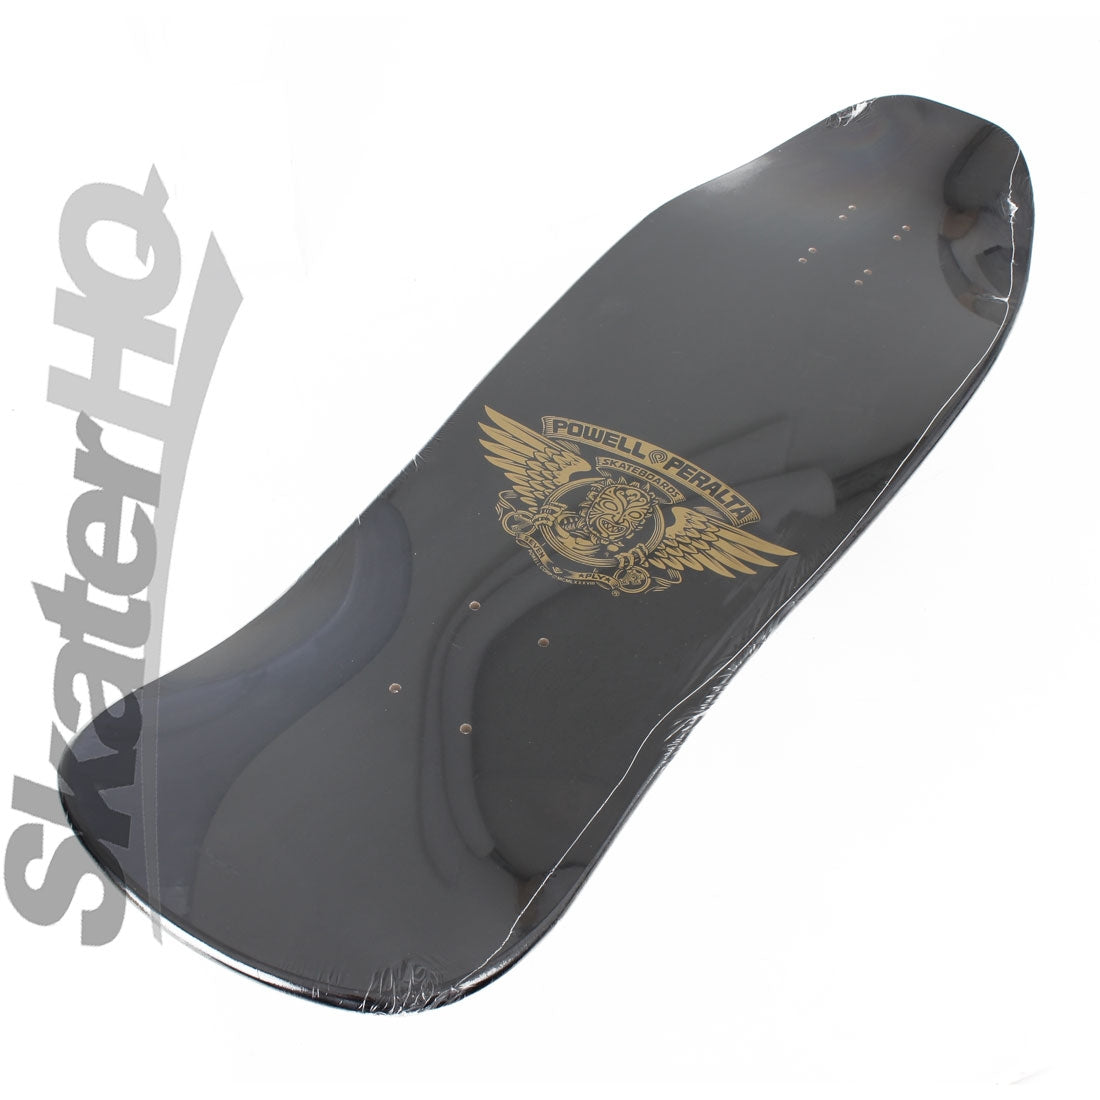 Powell Peralta Nicky Guerrero Mask 10.0 Deck - Black Skateboard Decks Old School